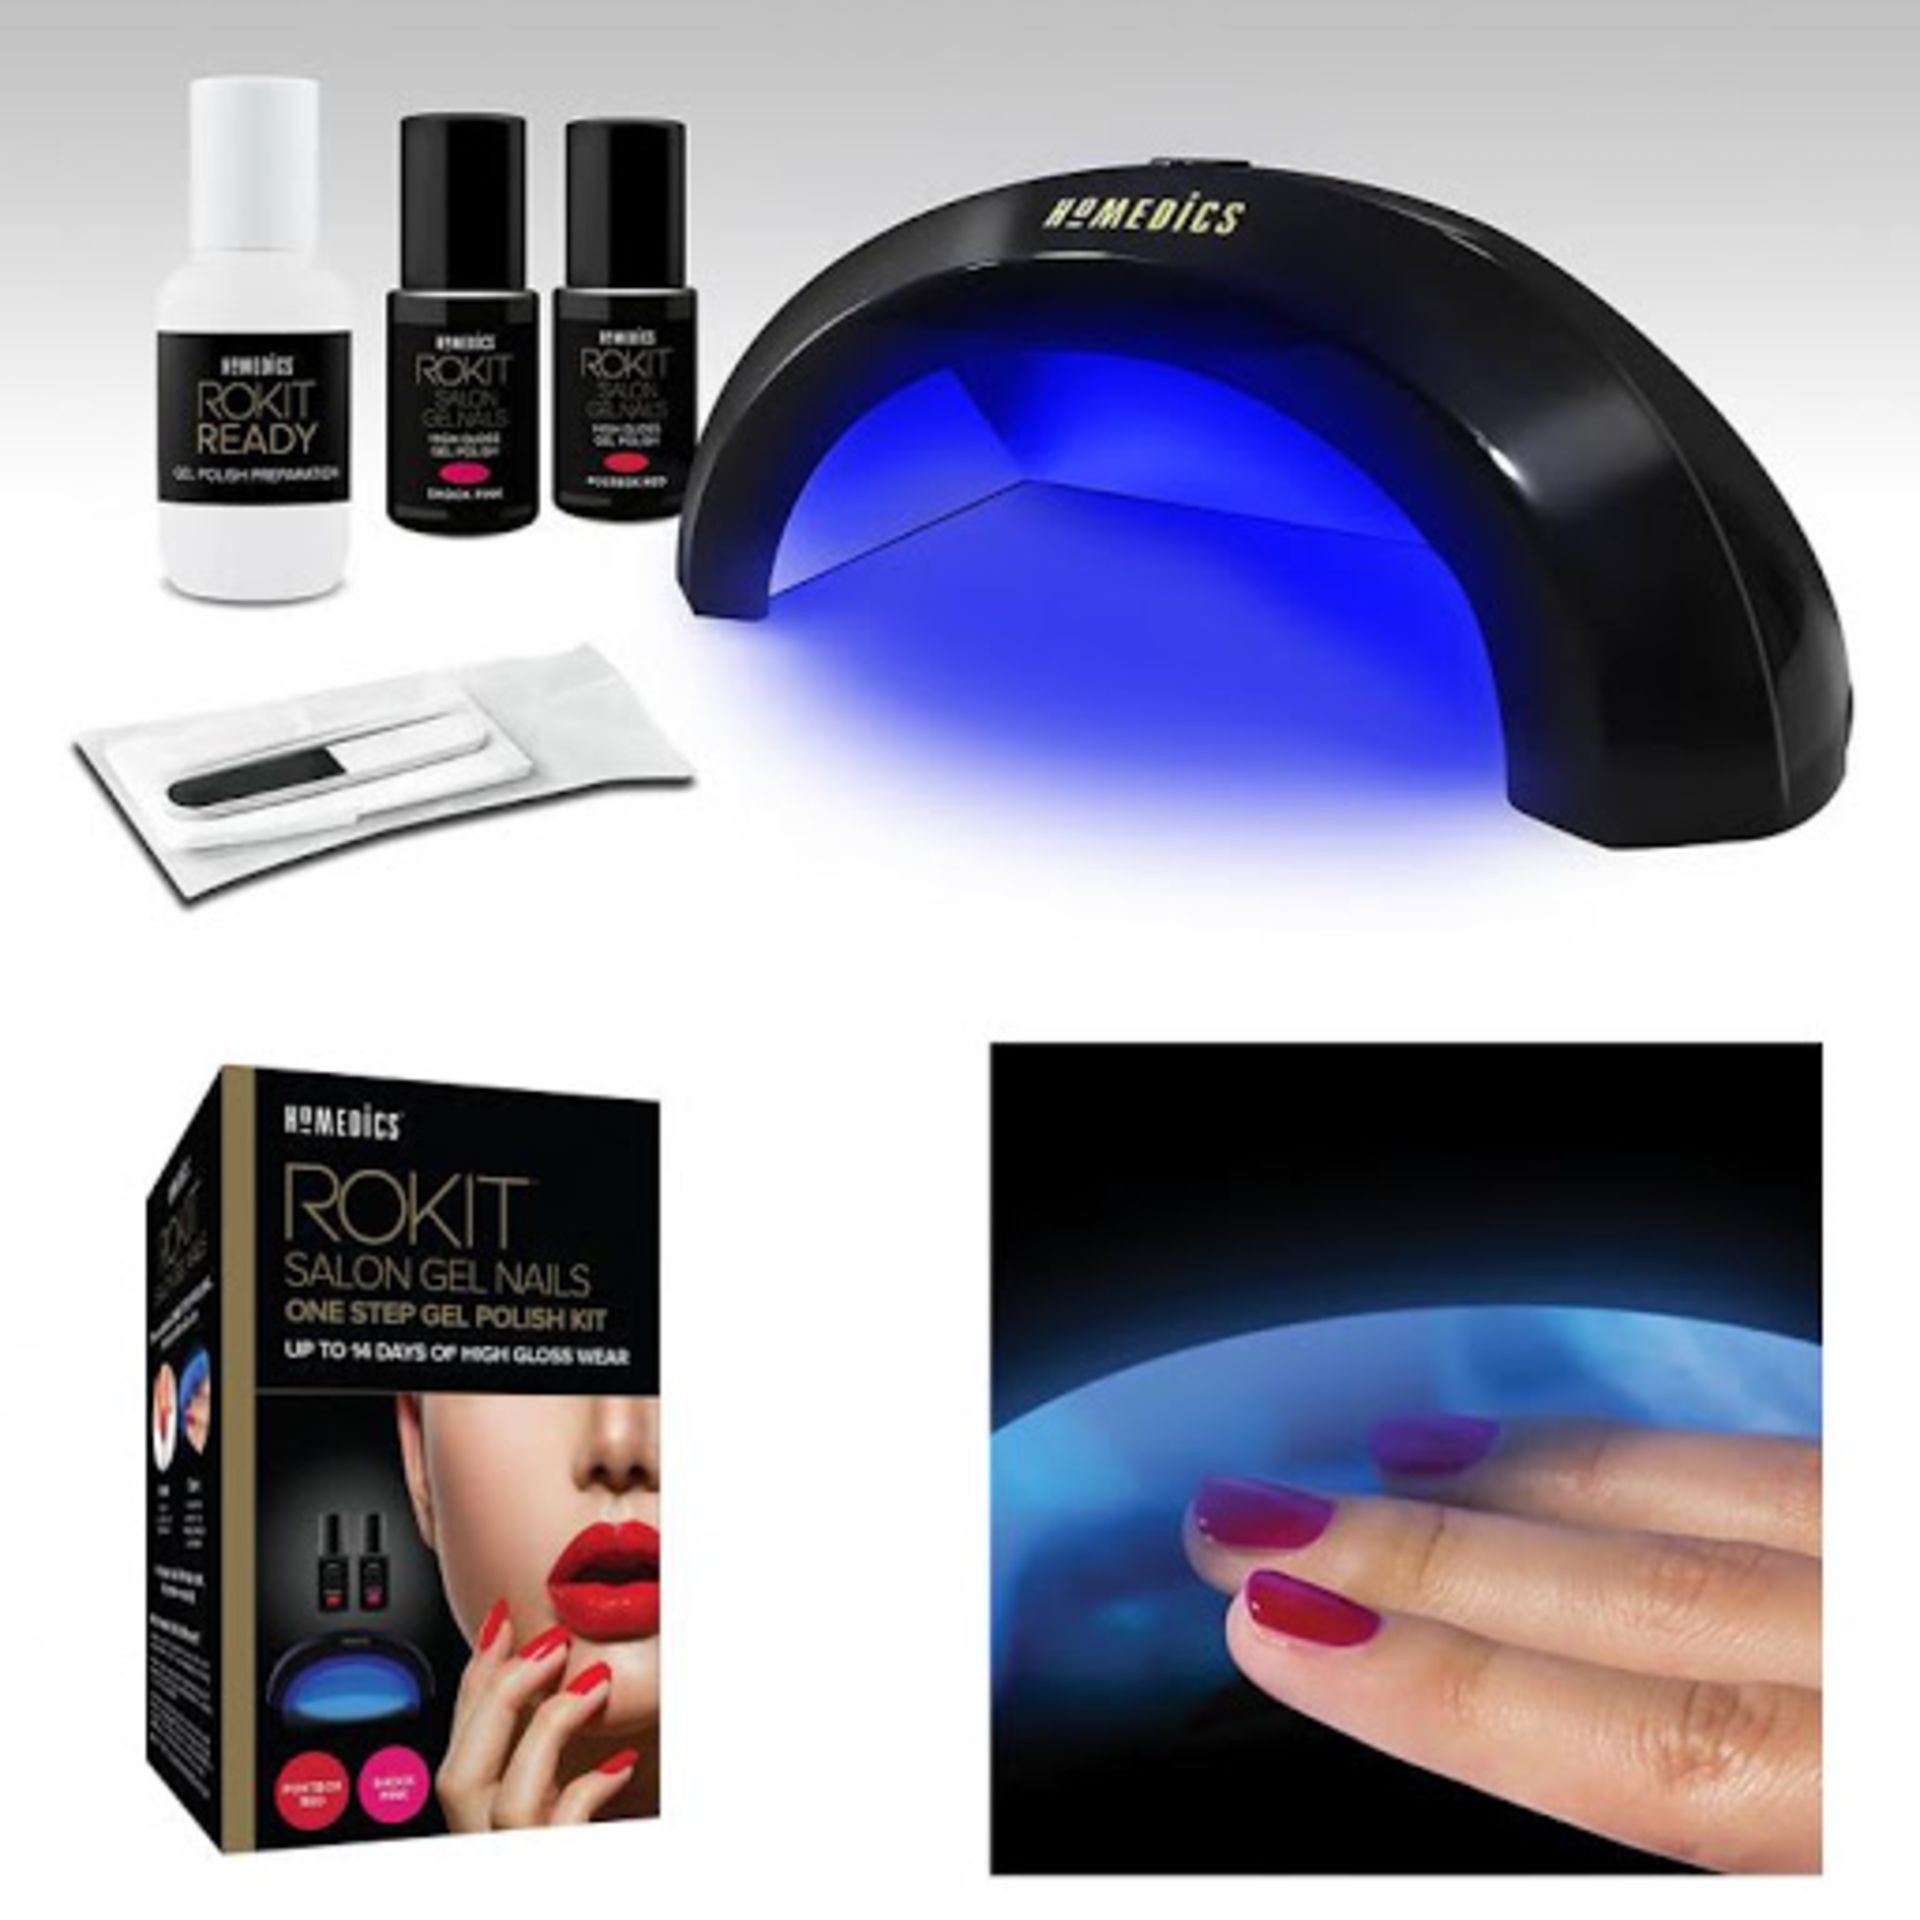 Homedics Rokit Salon Gel Nails Polish Kit new and packaged